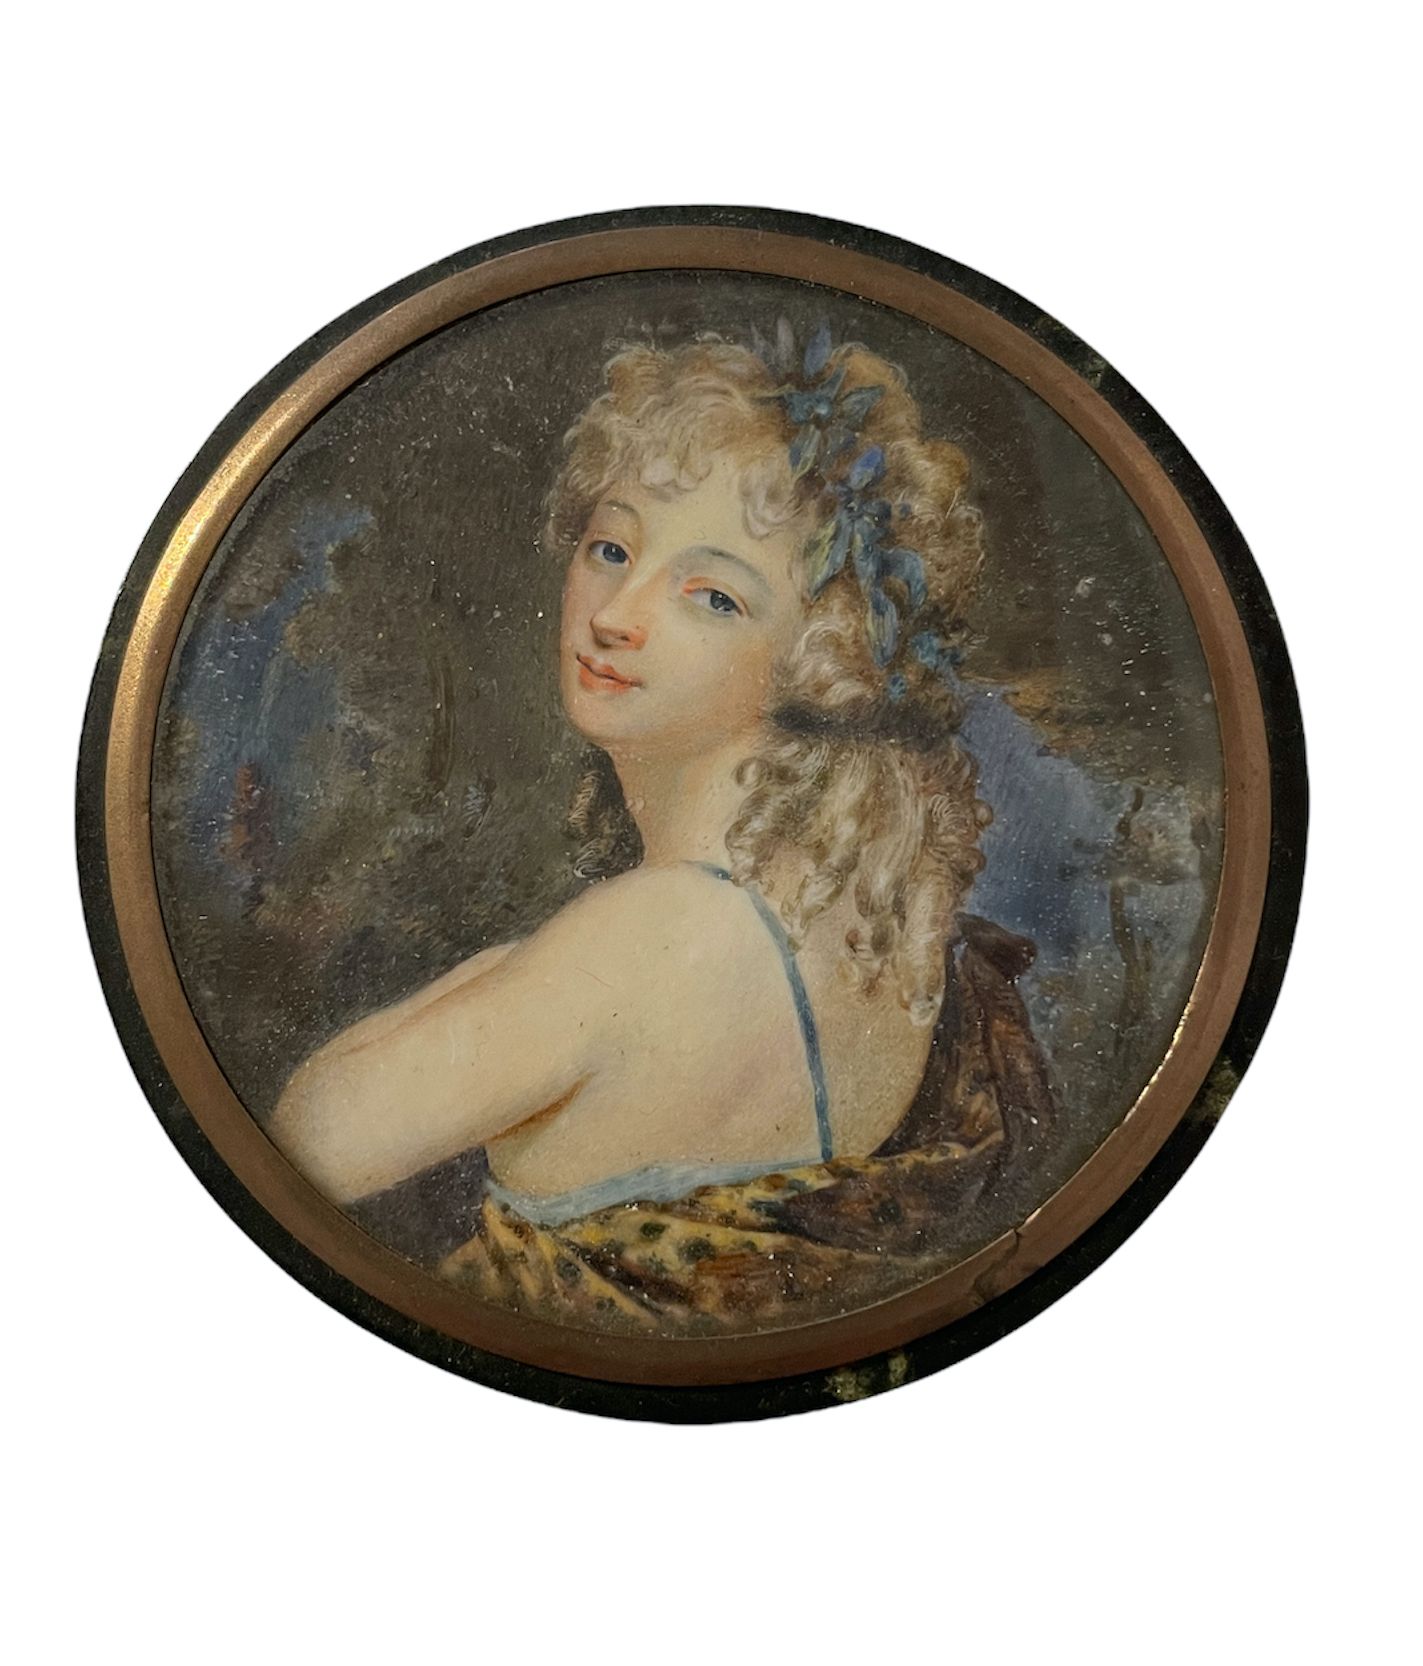 Null French school around 1800

Portrait of a woman

Miniature

7 cm diameter

C&hellip;